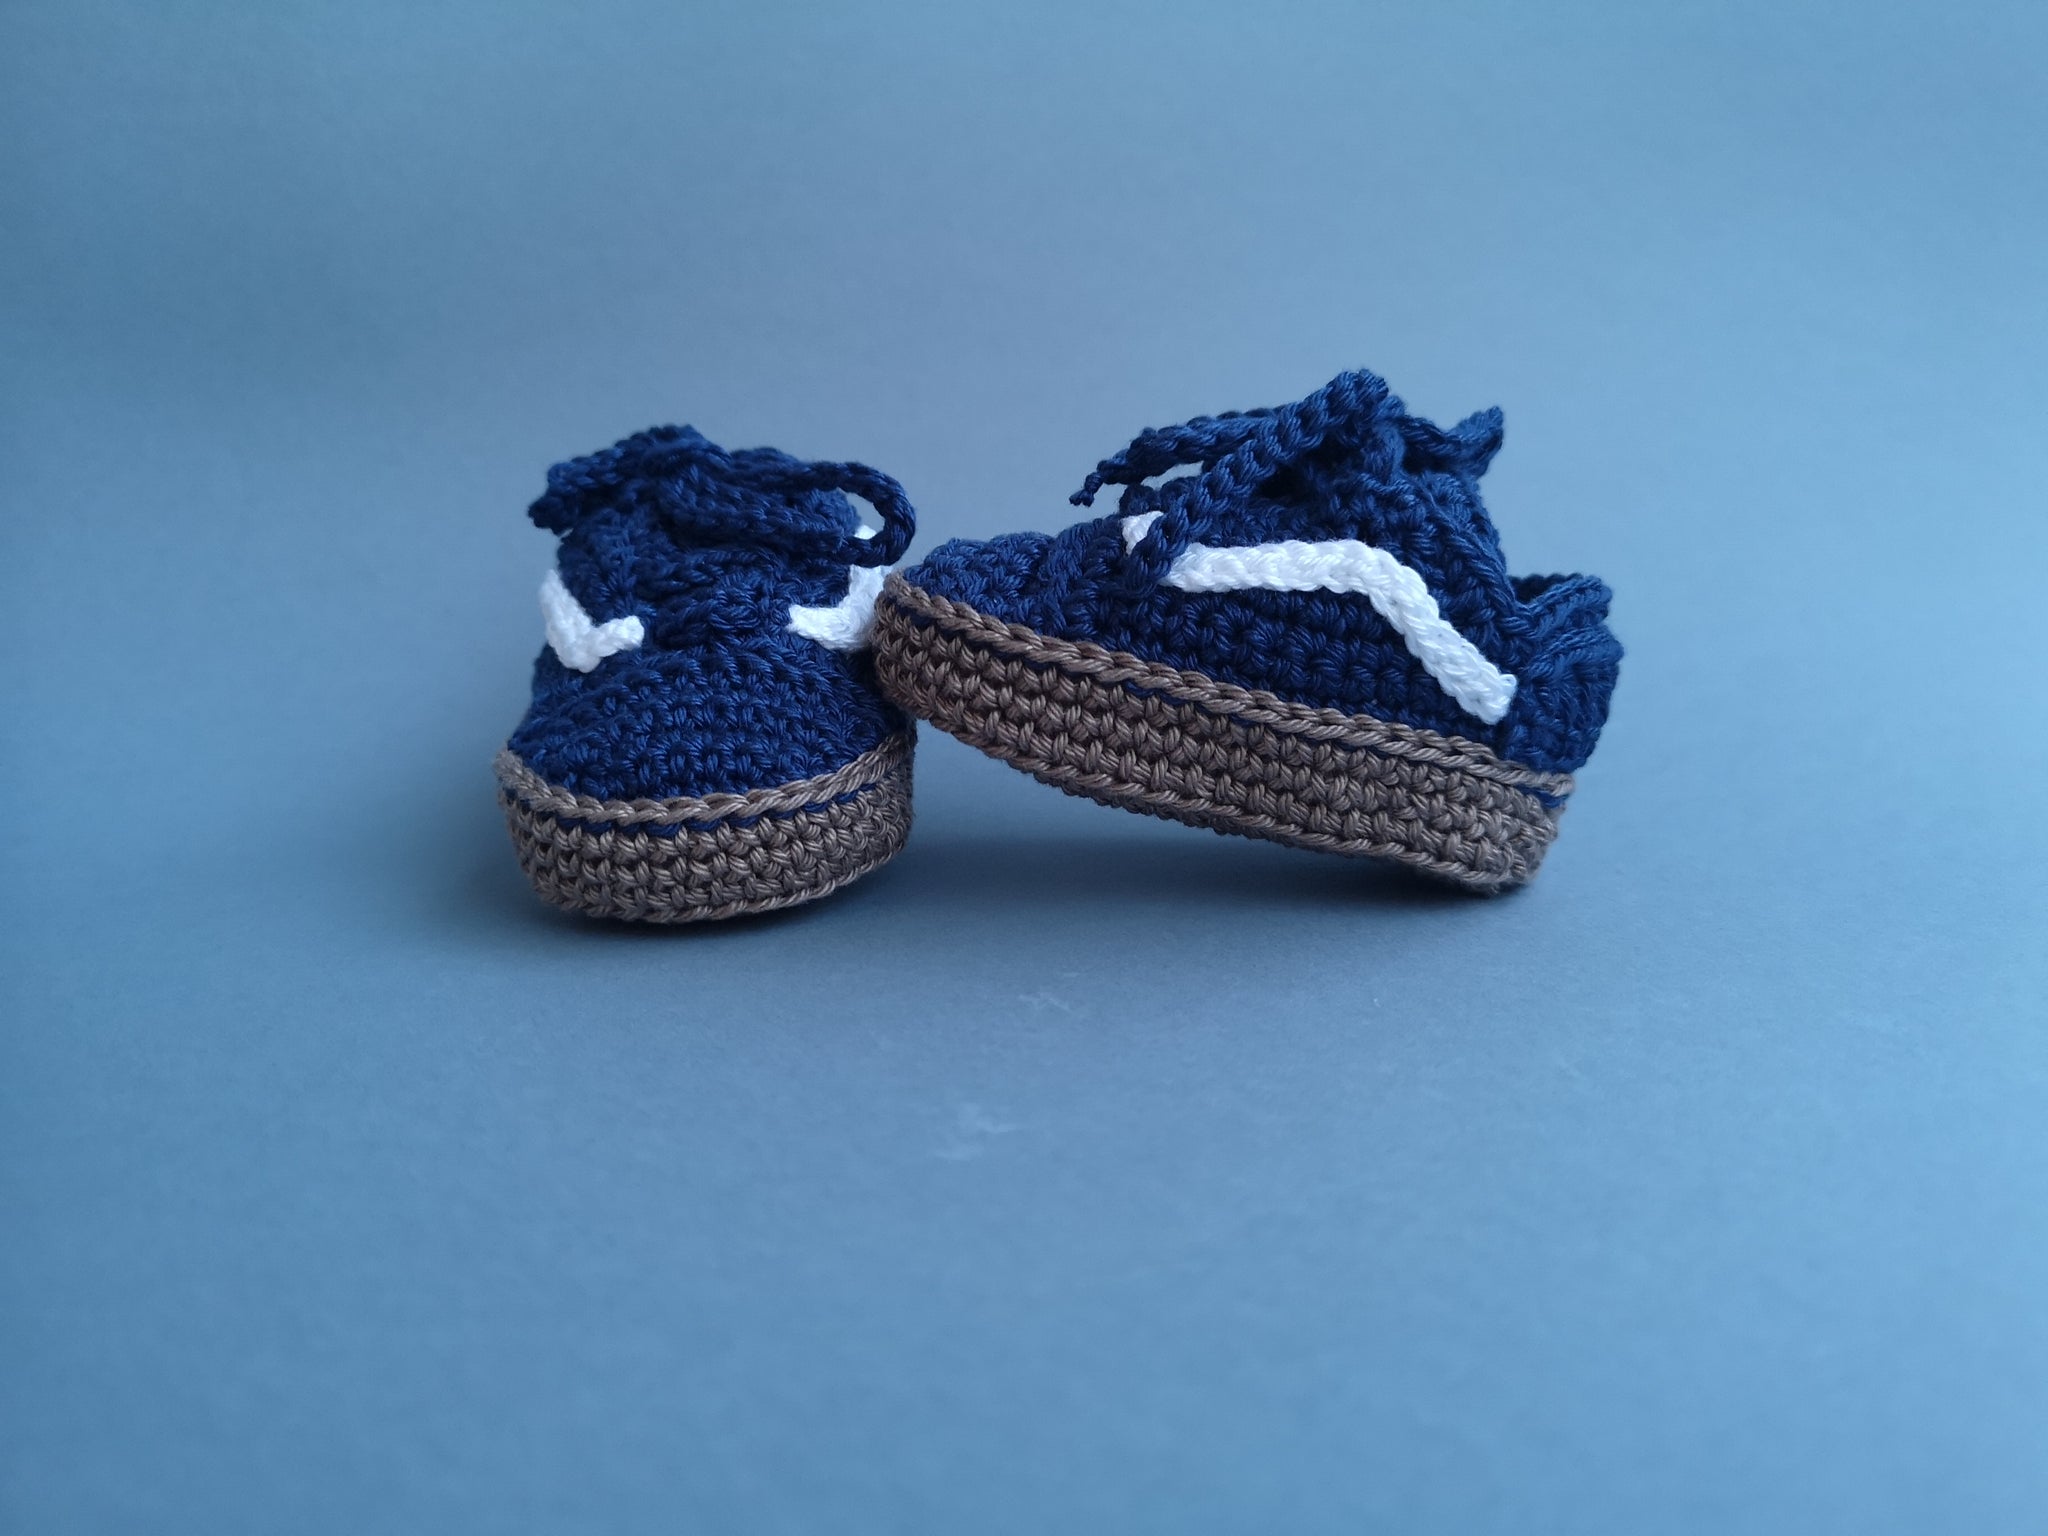 Crochet baby sneakers, Ozana booties, navy blue/brown colors